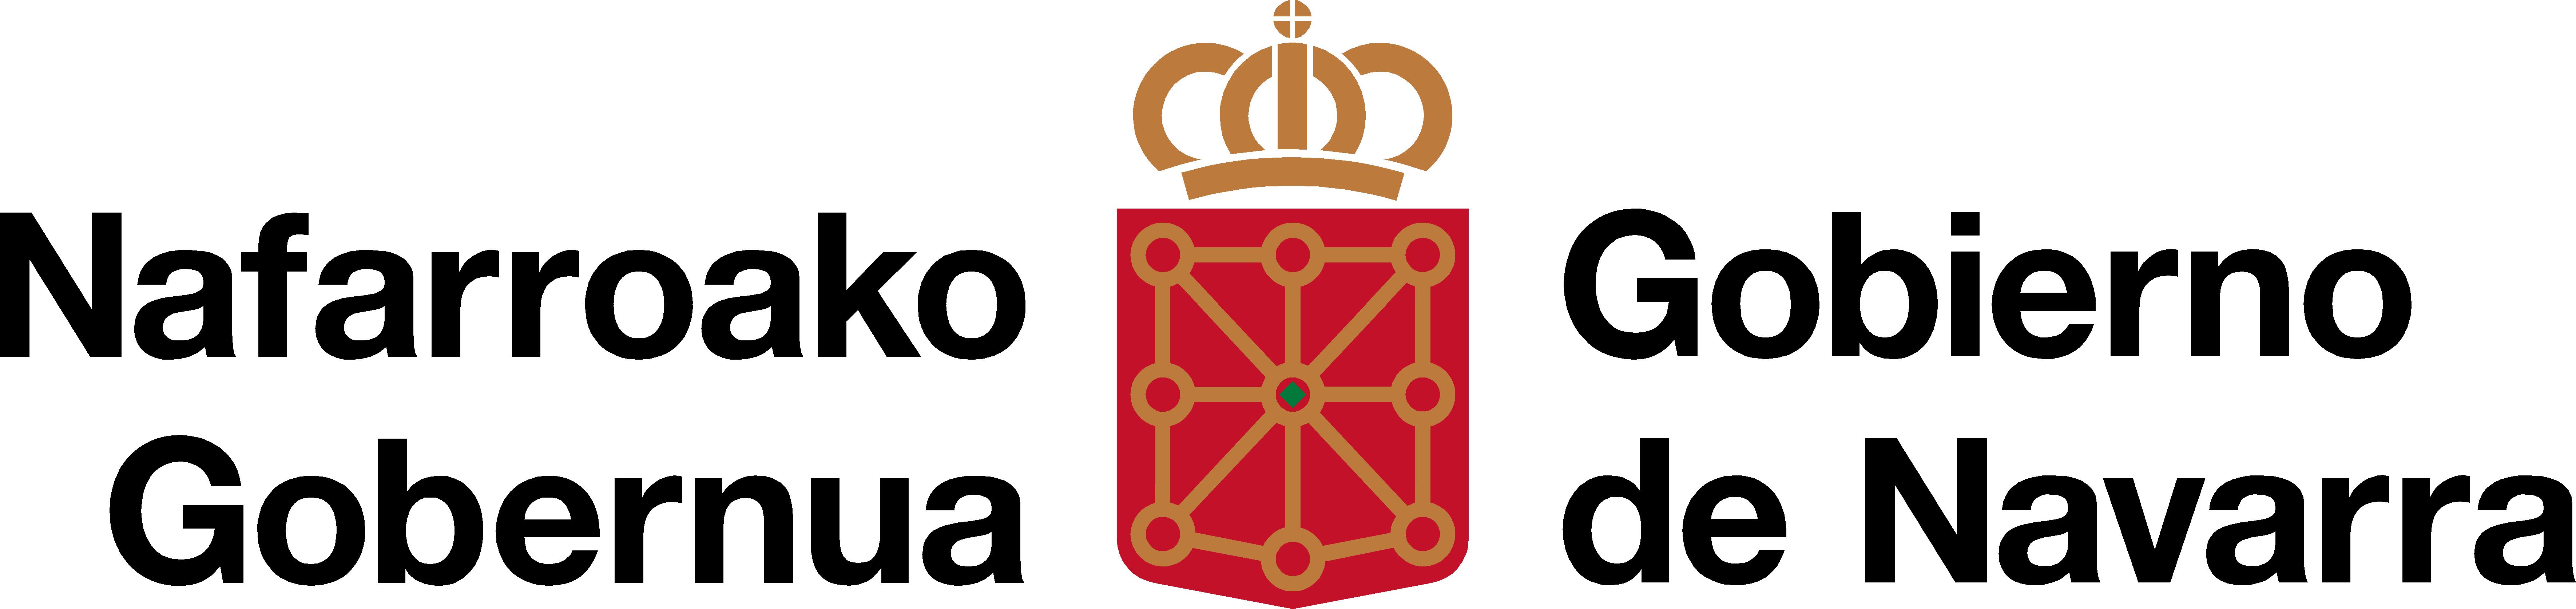 Gouvernement de Navarre - Euskarabidea